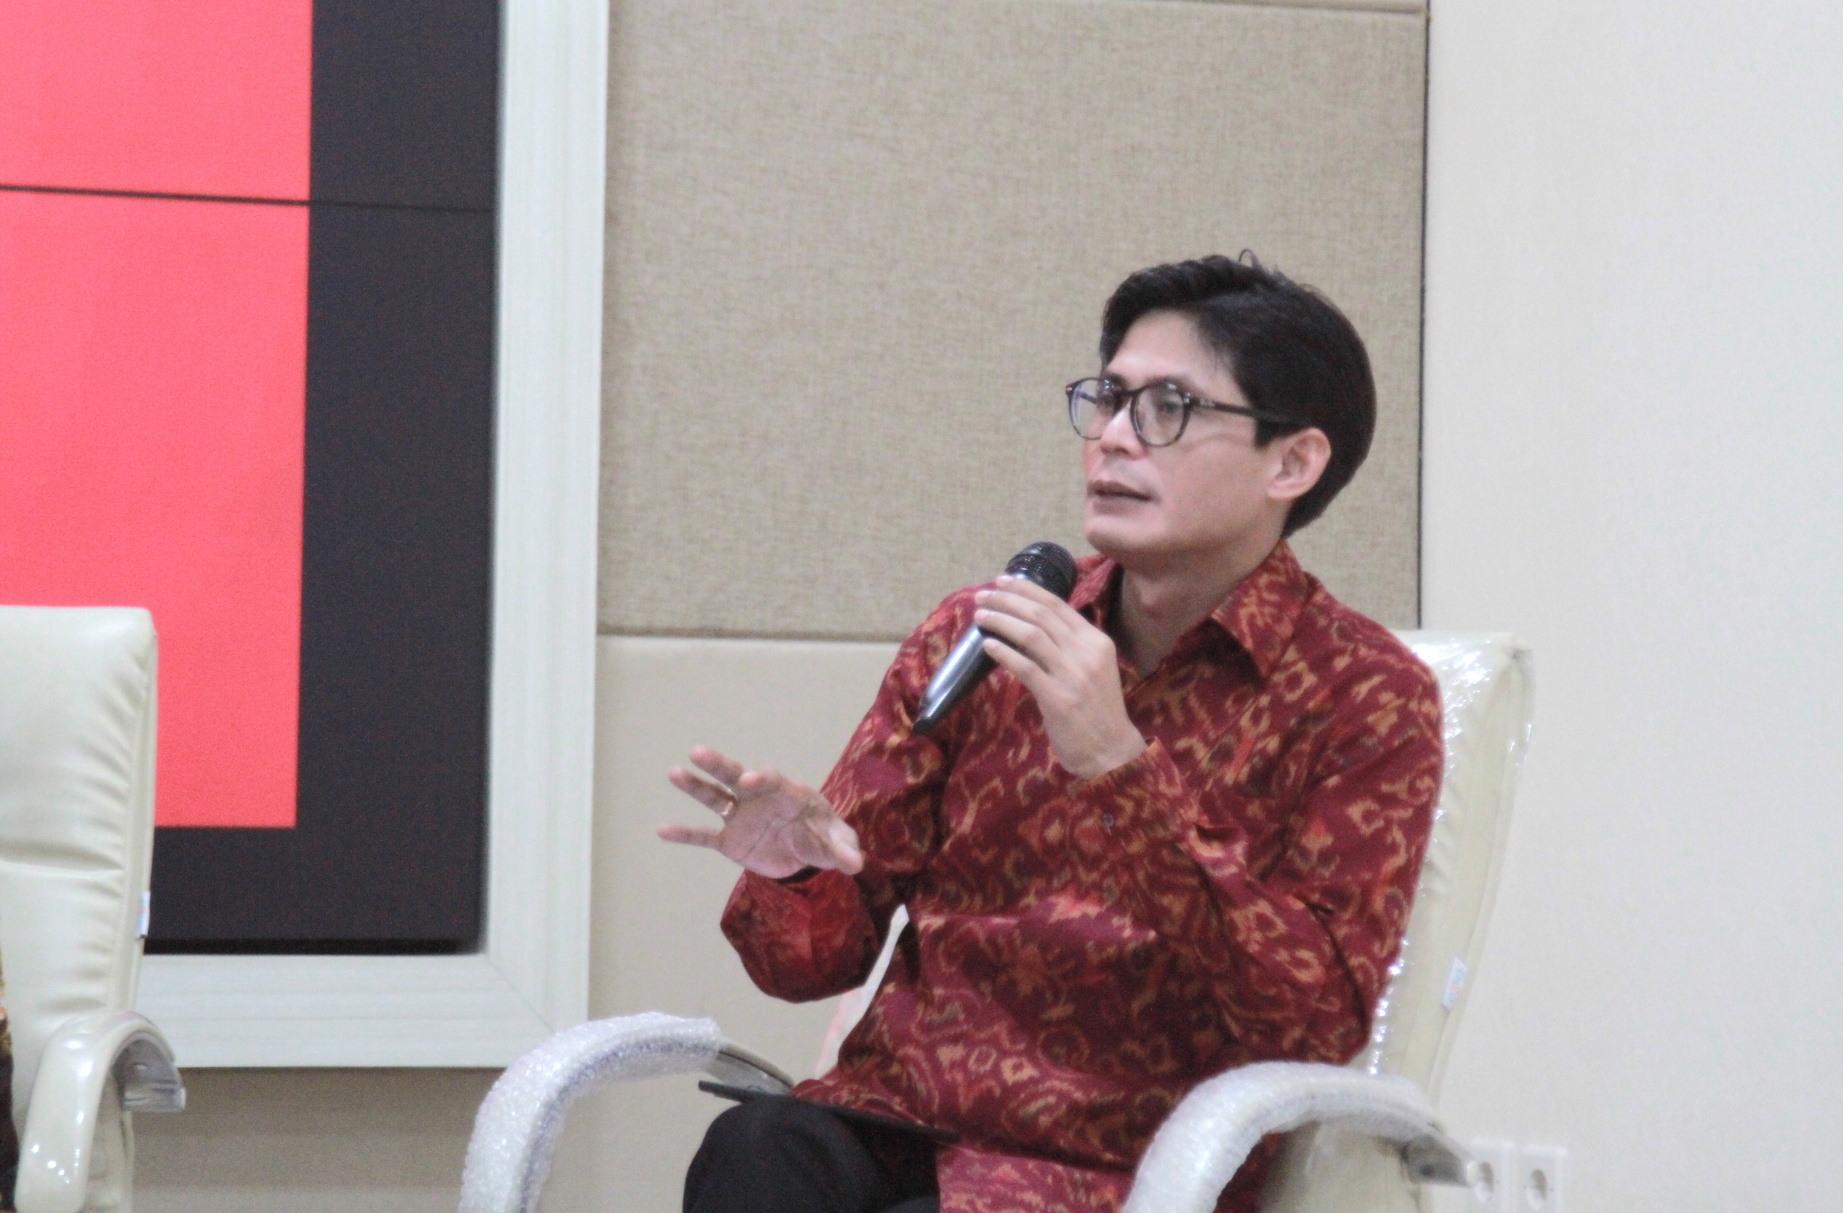 KPU RI menggelar diskusi media dengan tema Sosial Untuk Optimalisasi Tingkat Partisipasi Pemilih Milinial (Ashar/SinPo.id)